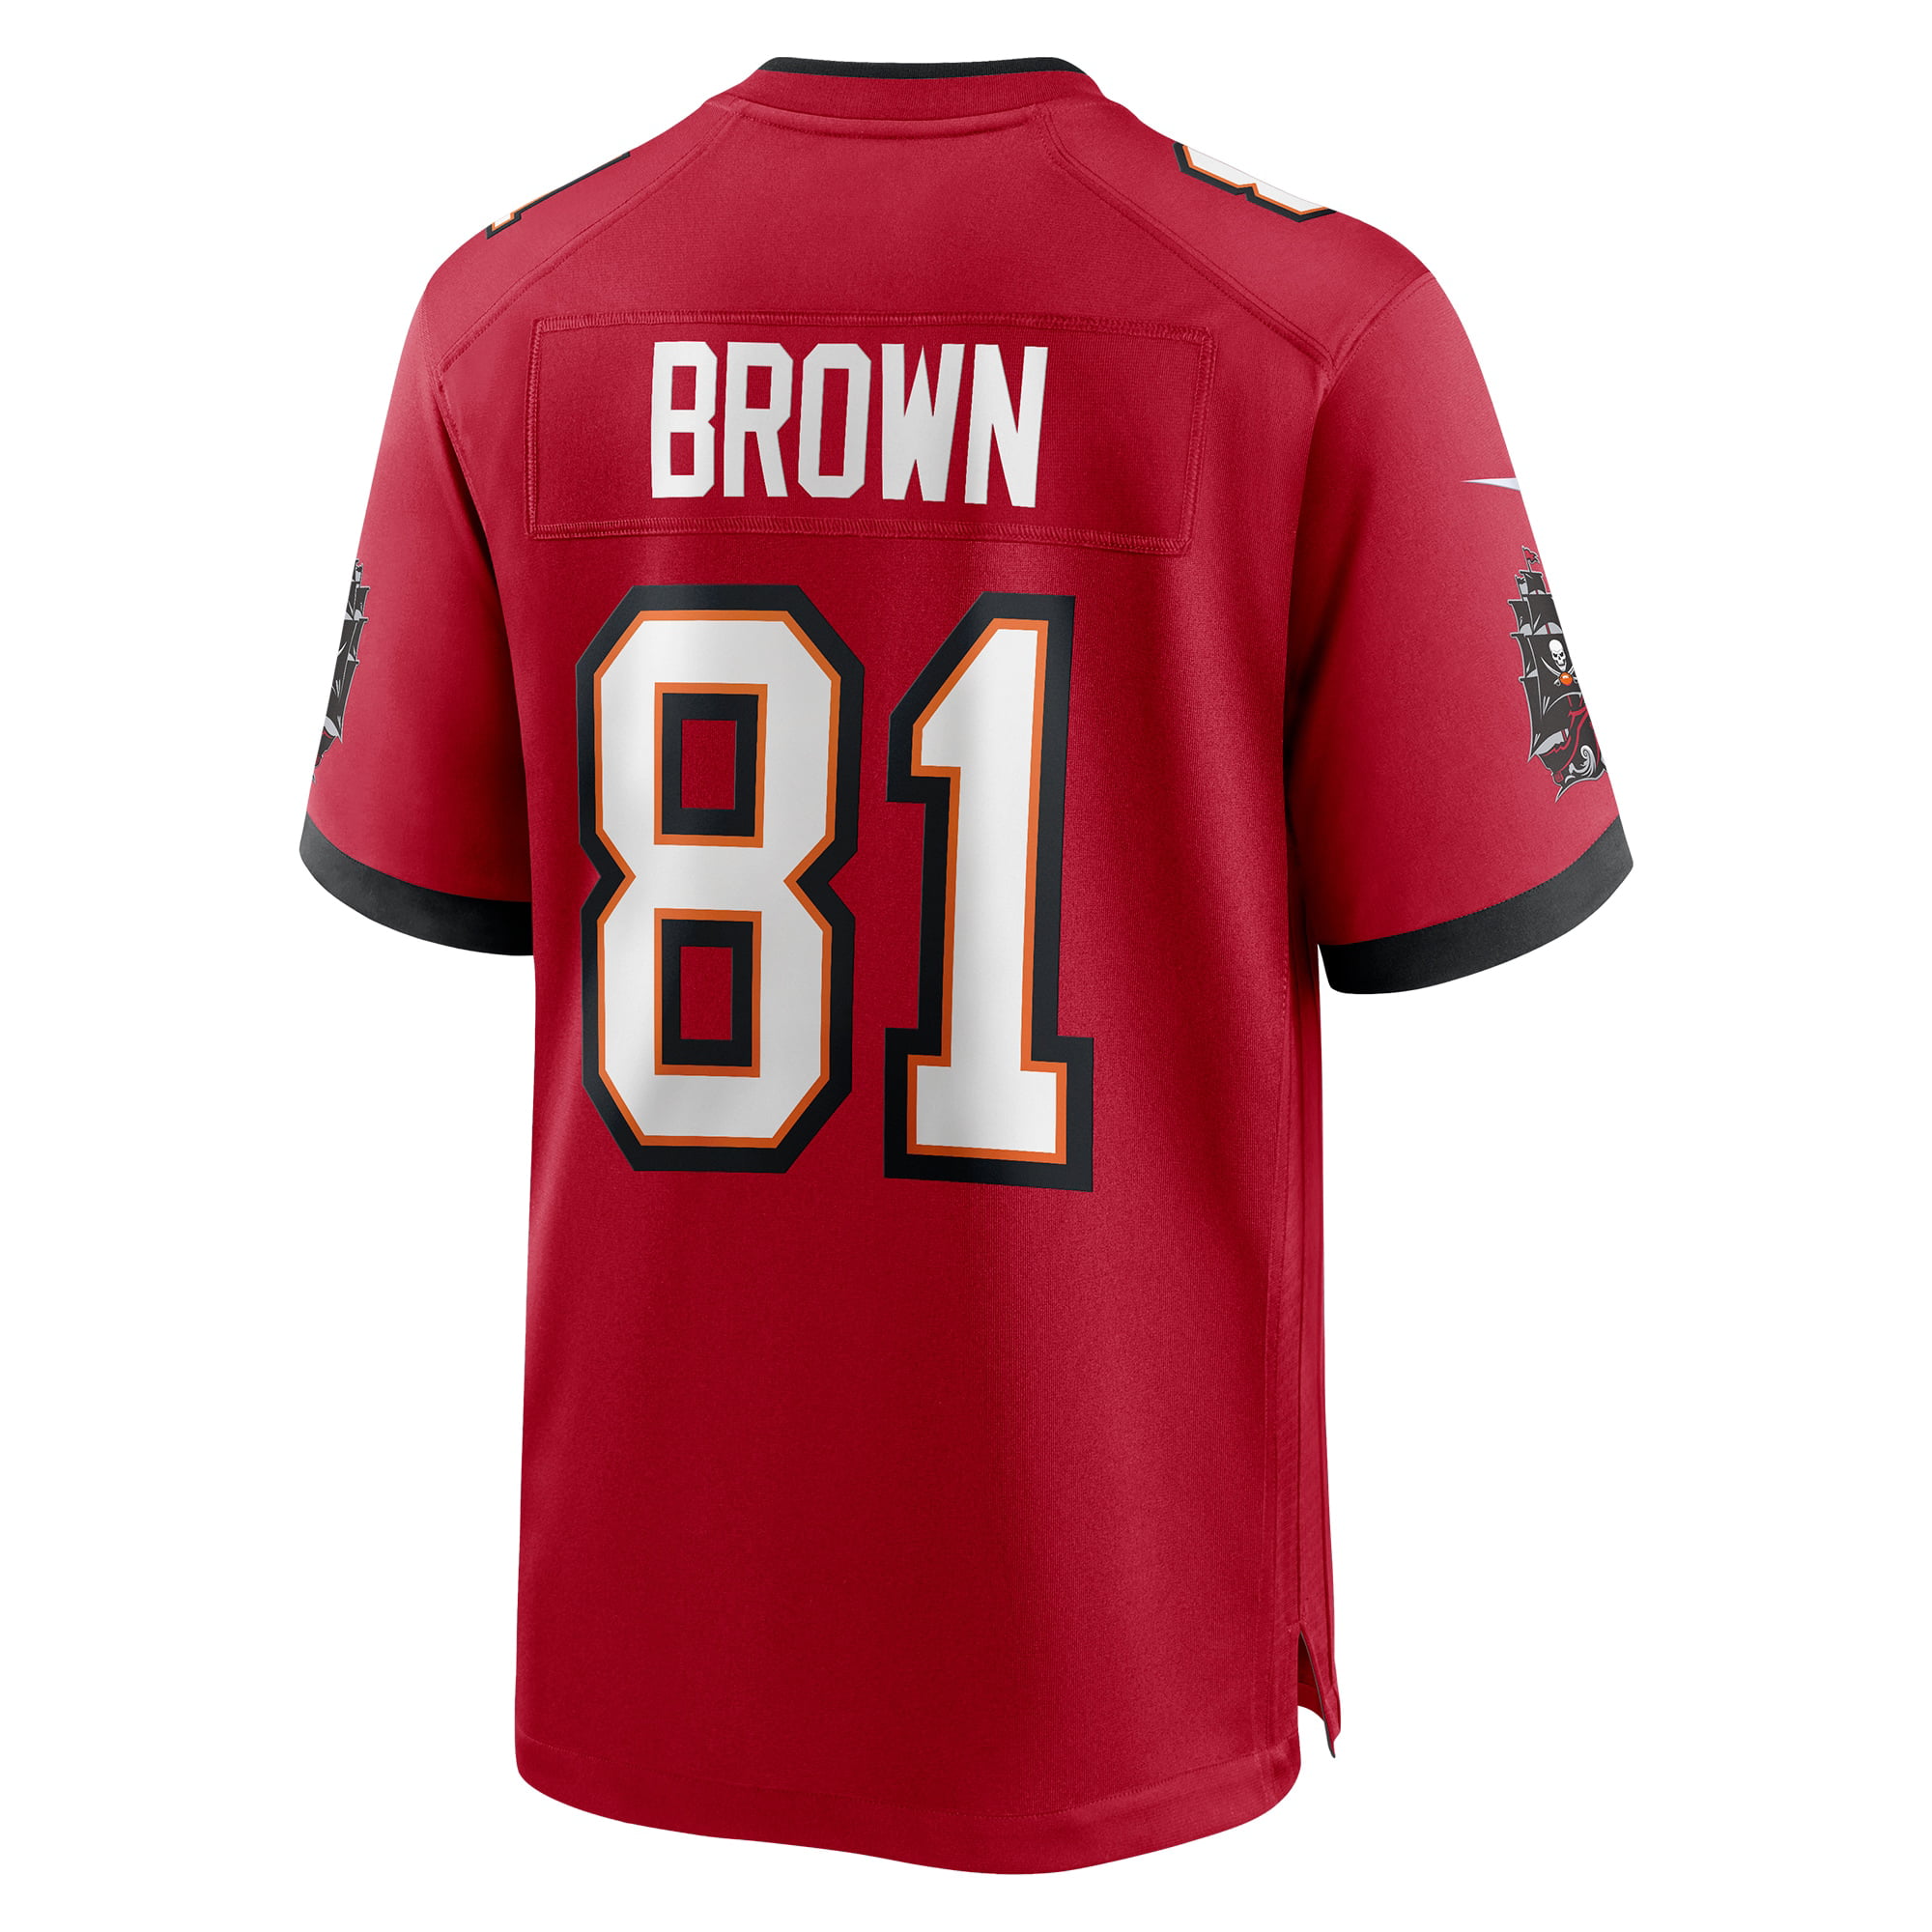 Antonio Brown Tampa Bay Buccaneers Nike Game Jersey - Red